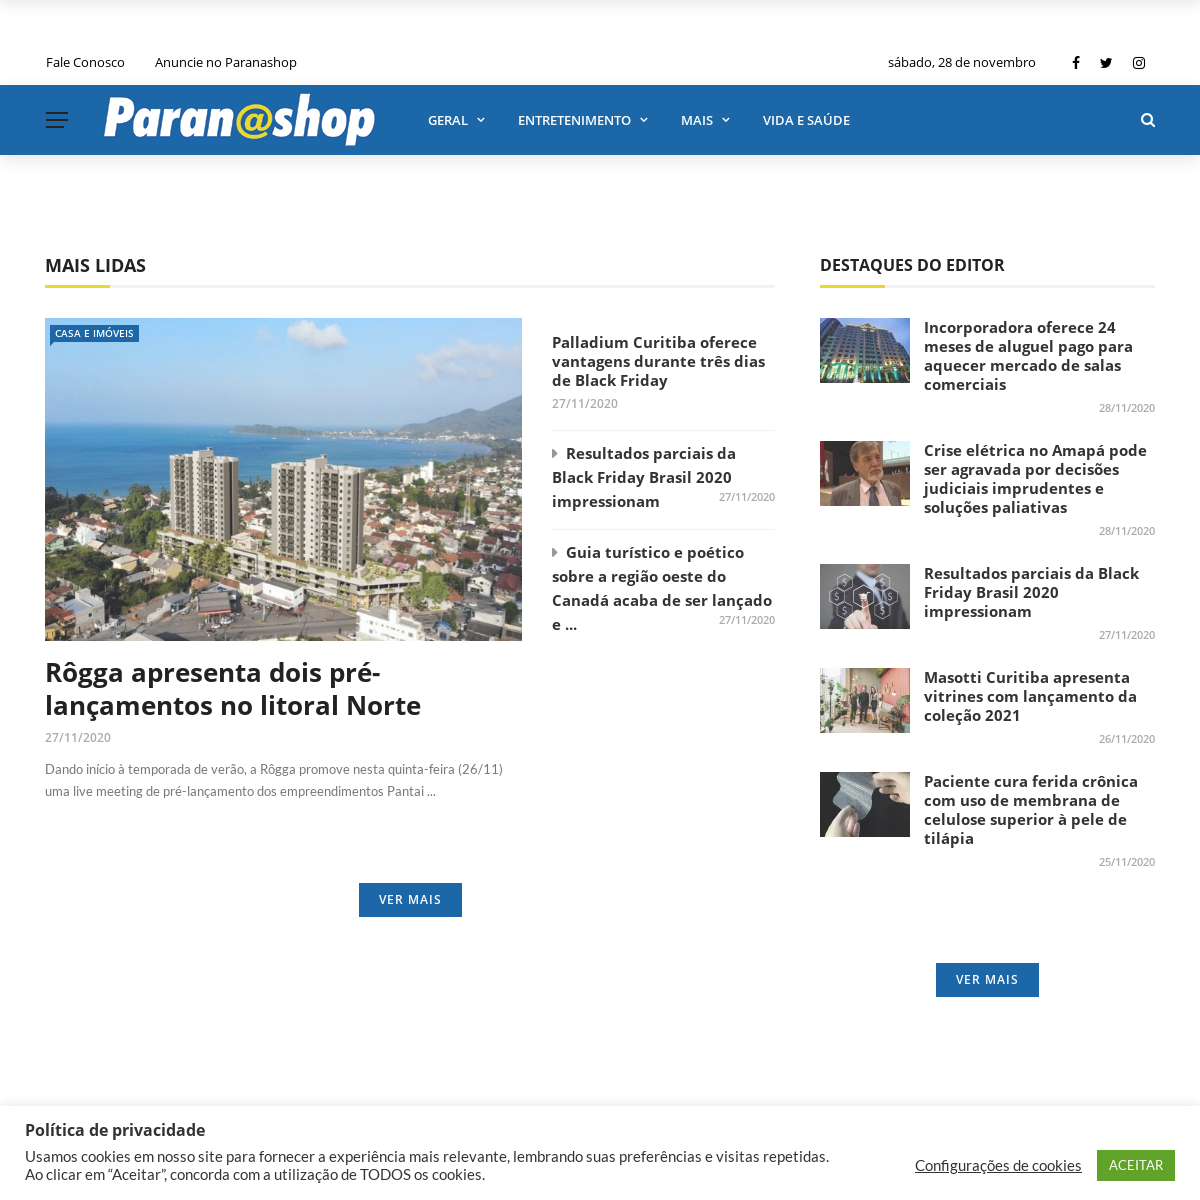 A complete backup of paranashop.com.br